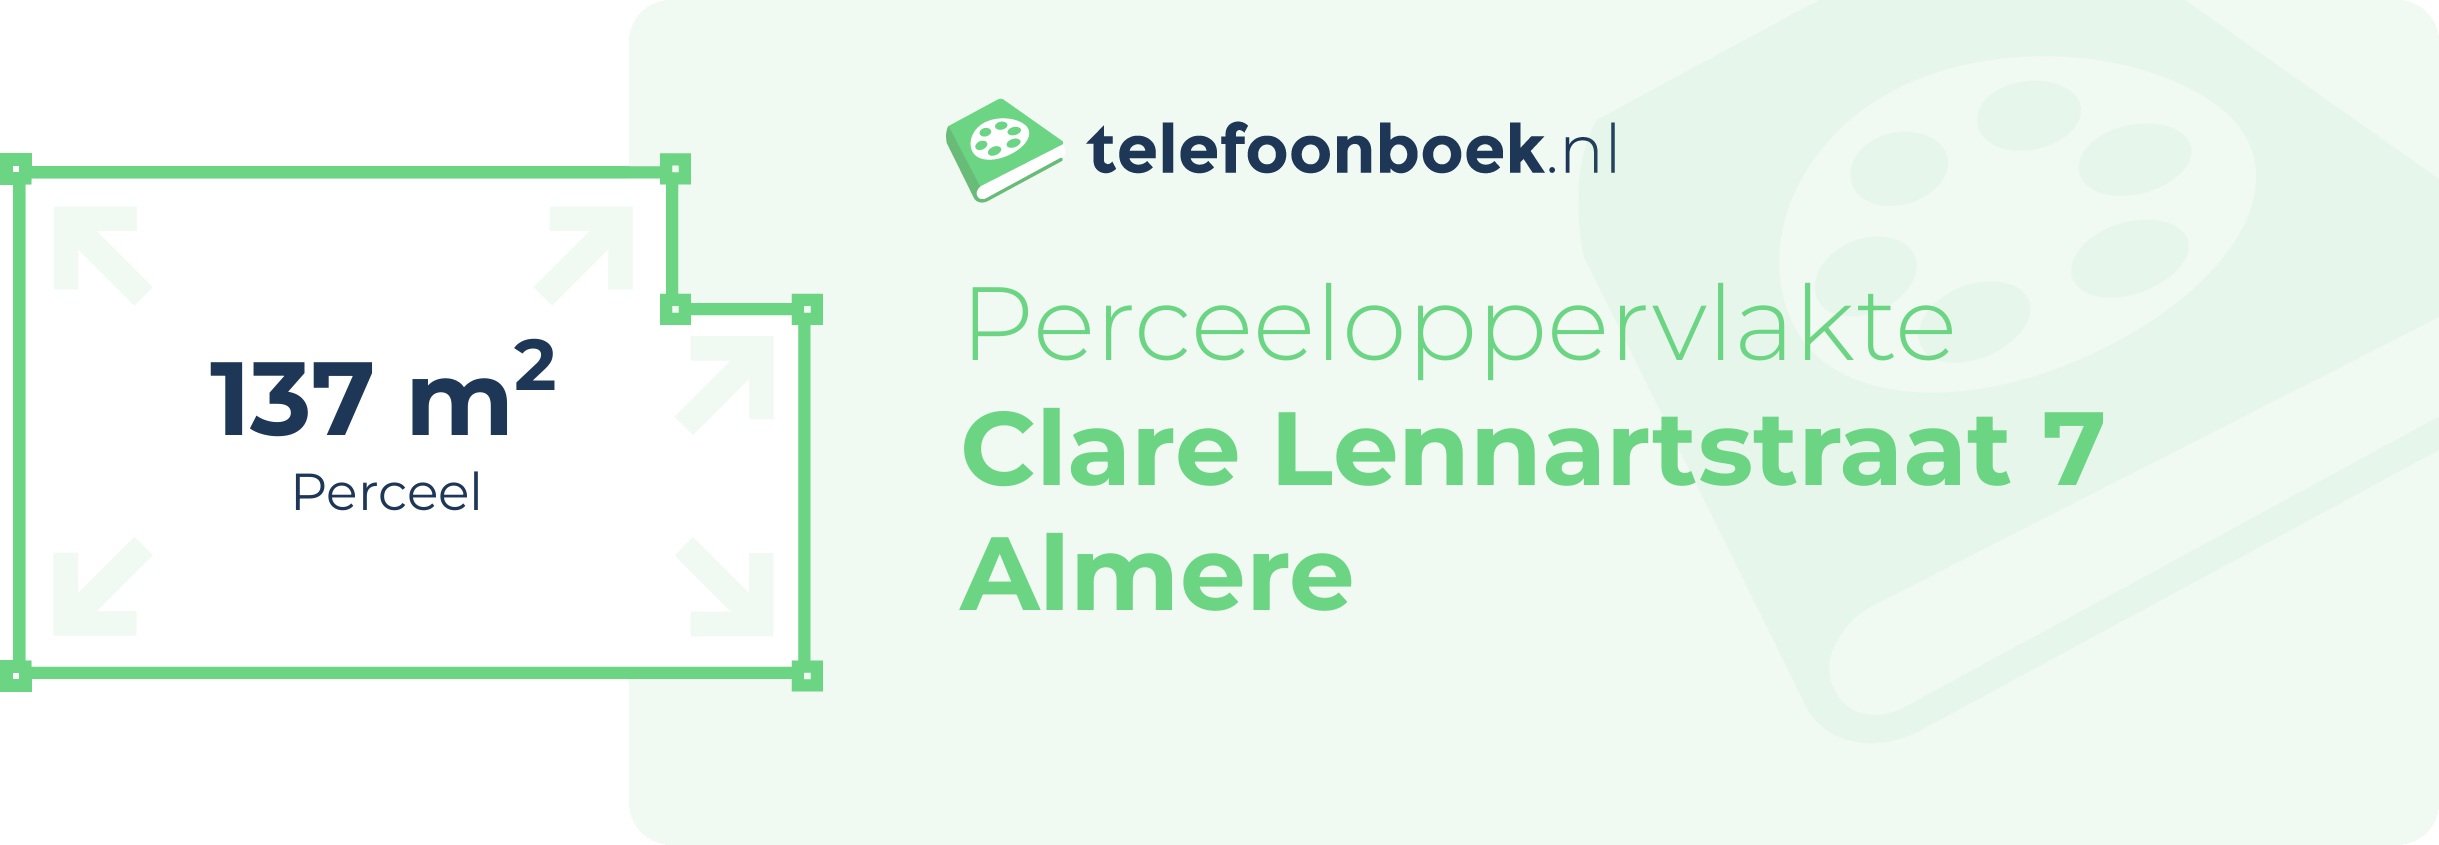 Perceeloppervlakte Clare Lennartstraat 7 Almere